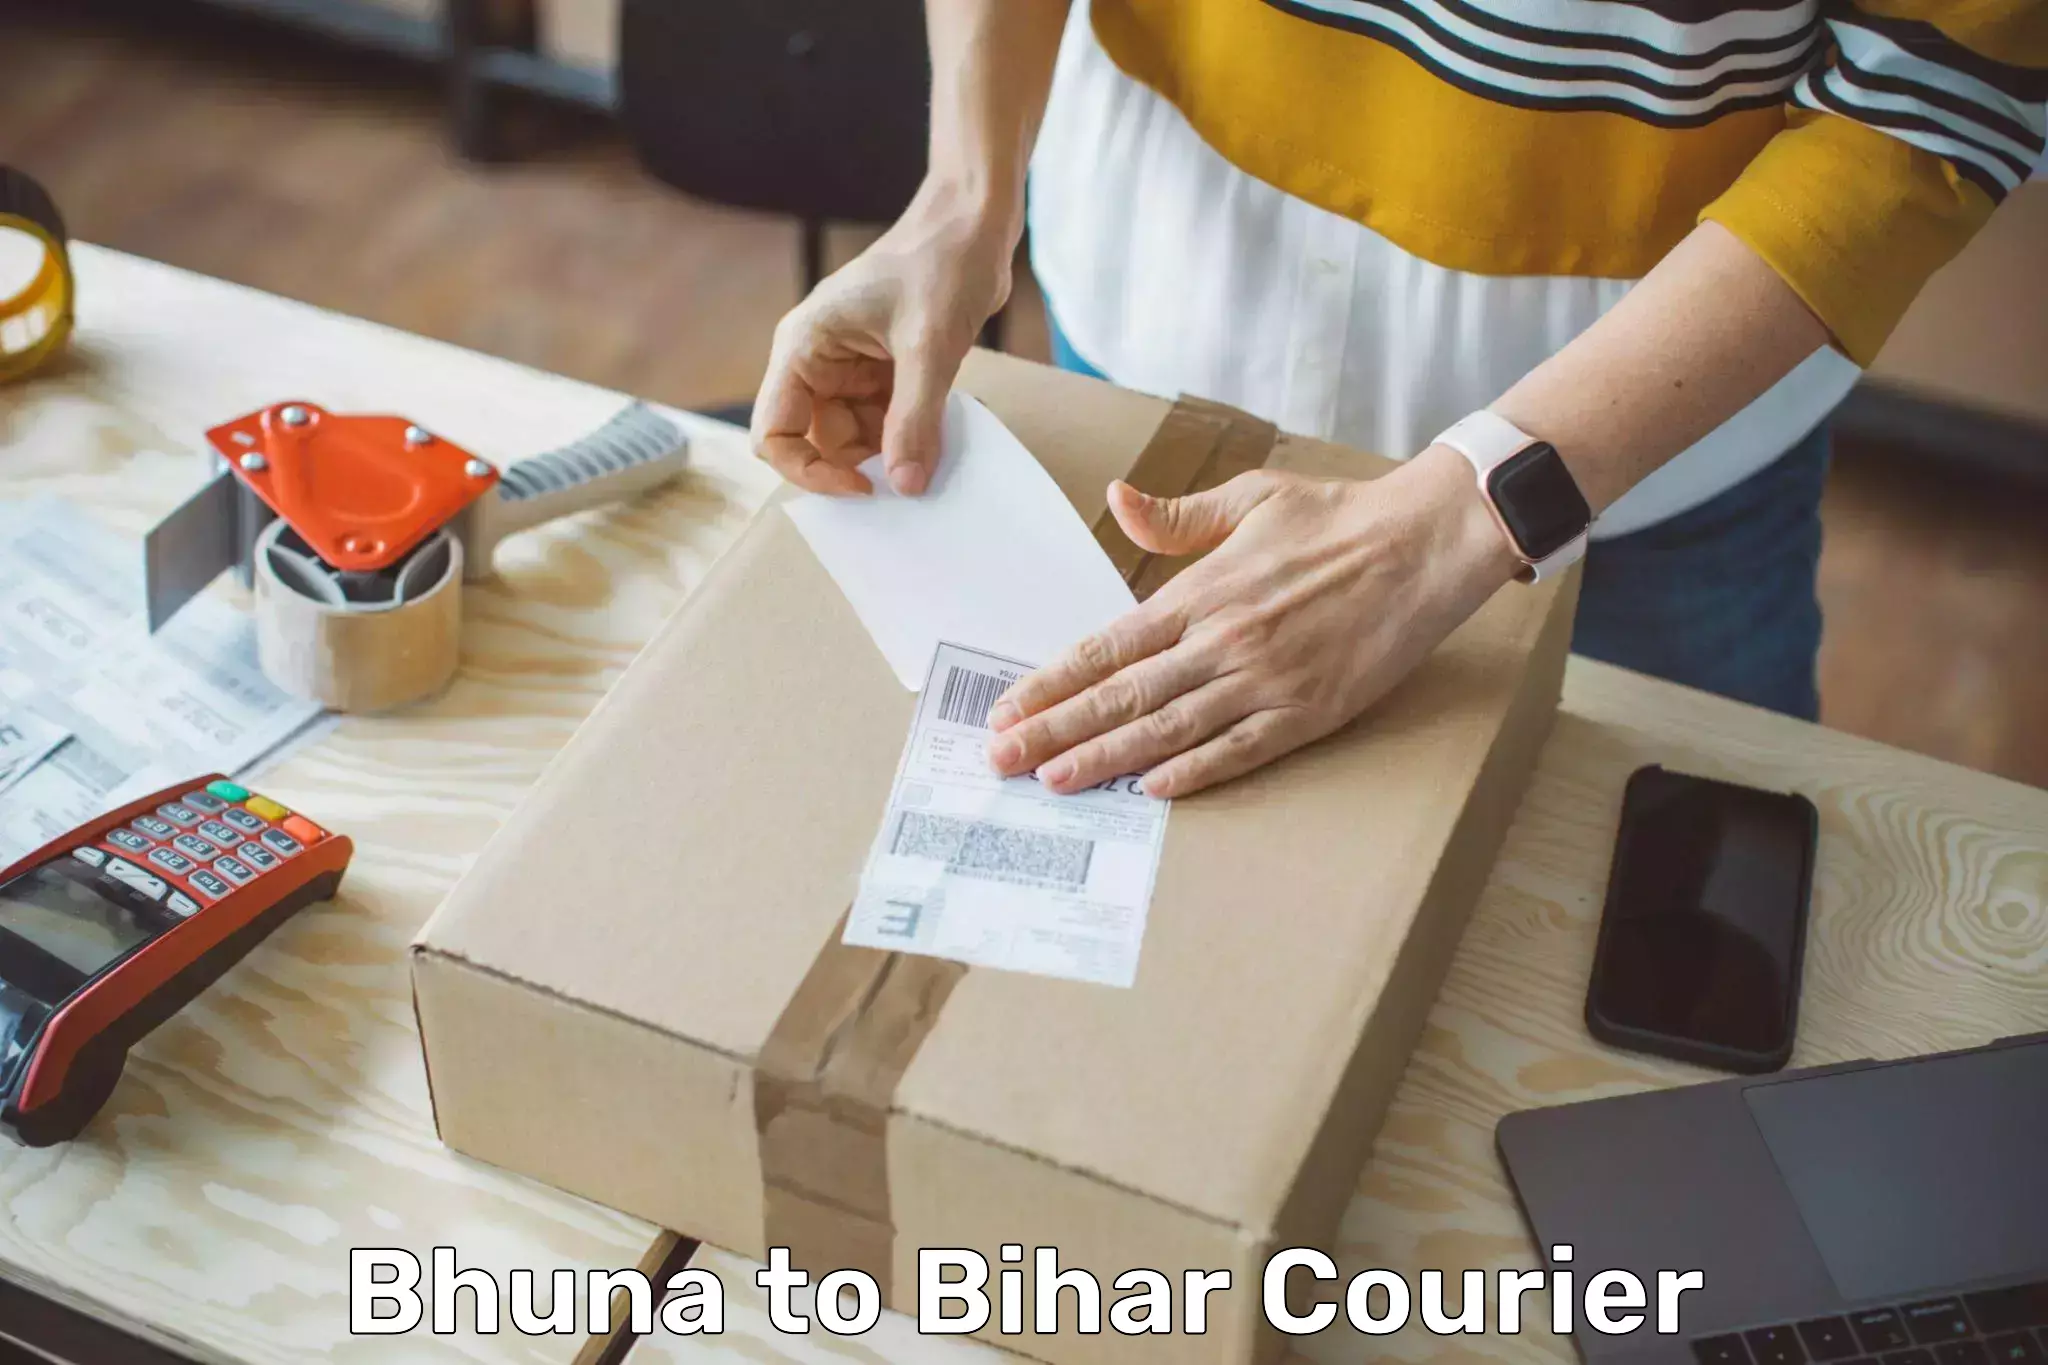 Modern delivery methods Bhuna to Biraul